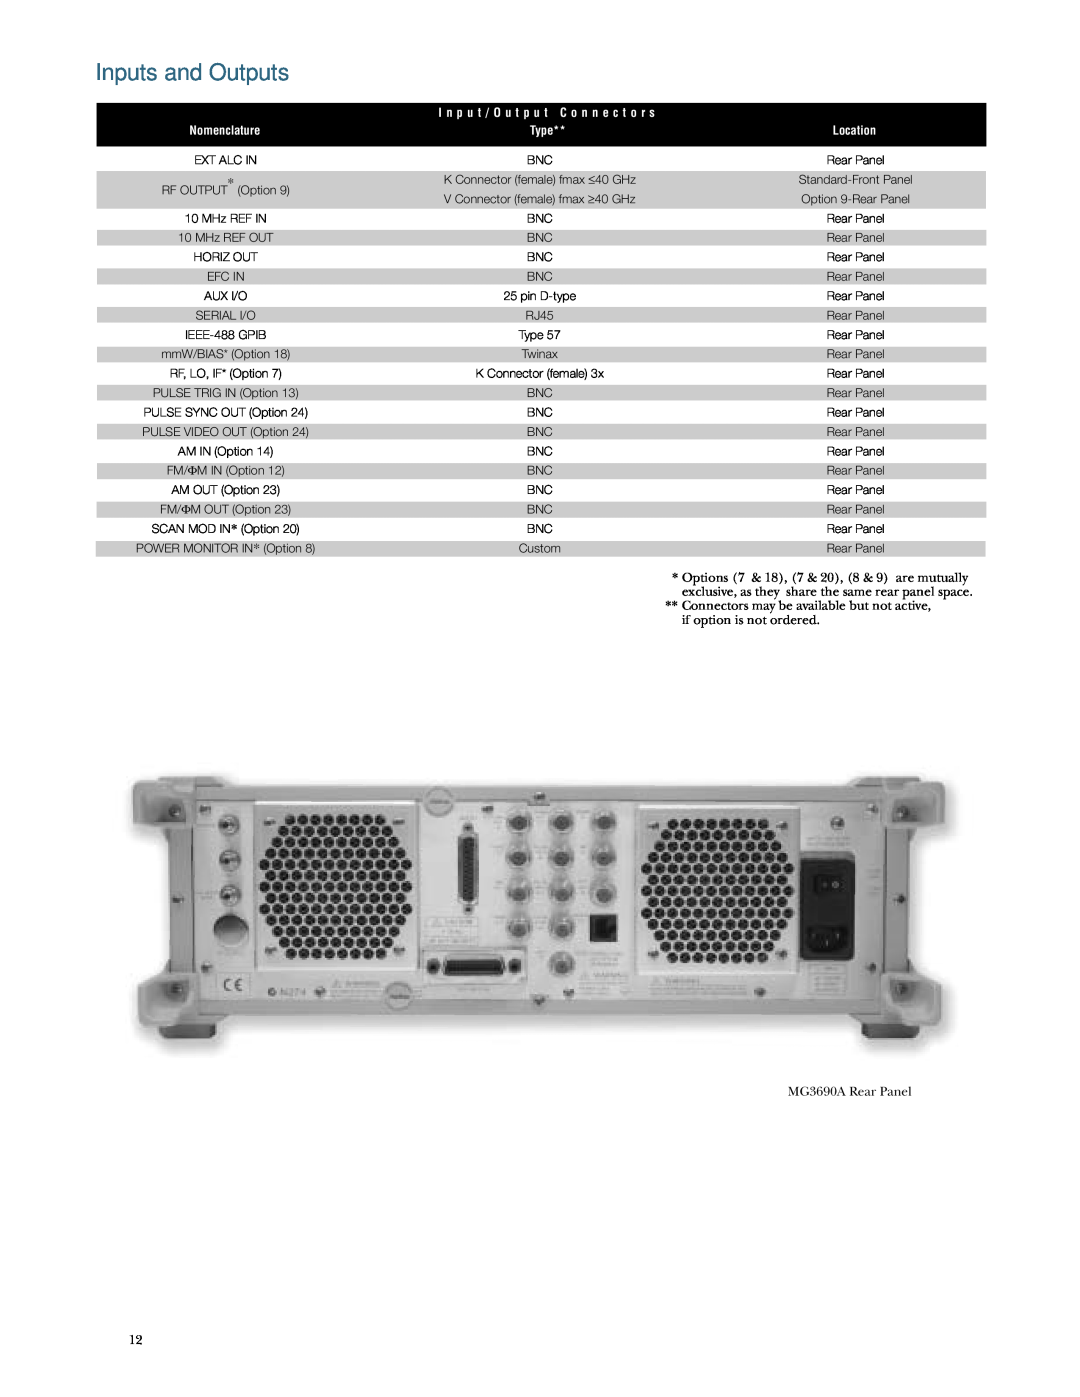 Anritsu manual Inputs and Outputs, MG3690A Rear Panel 